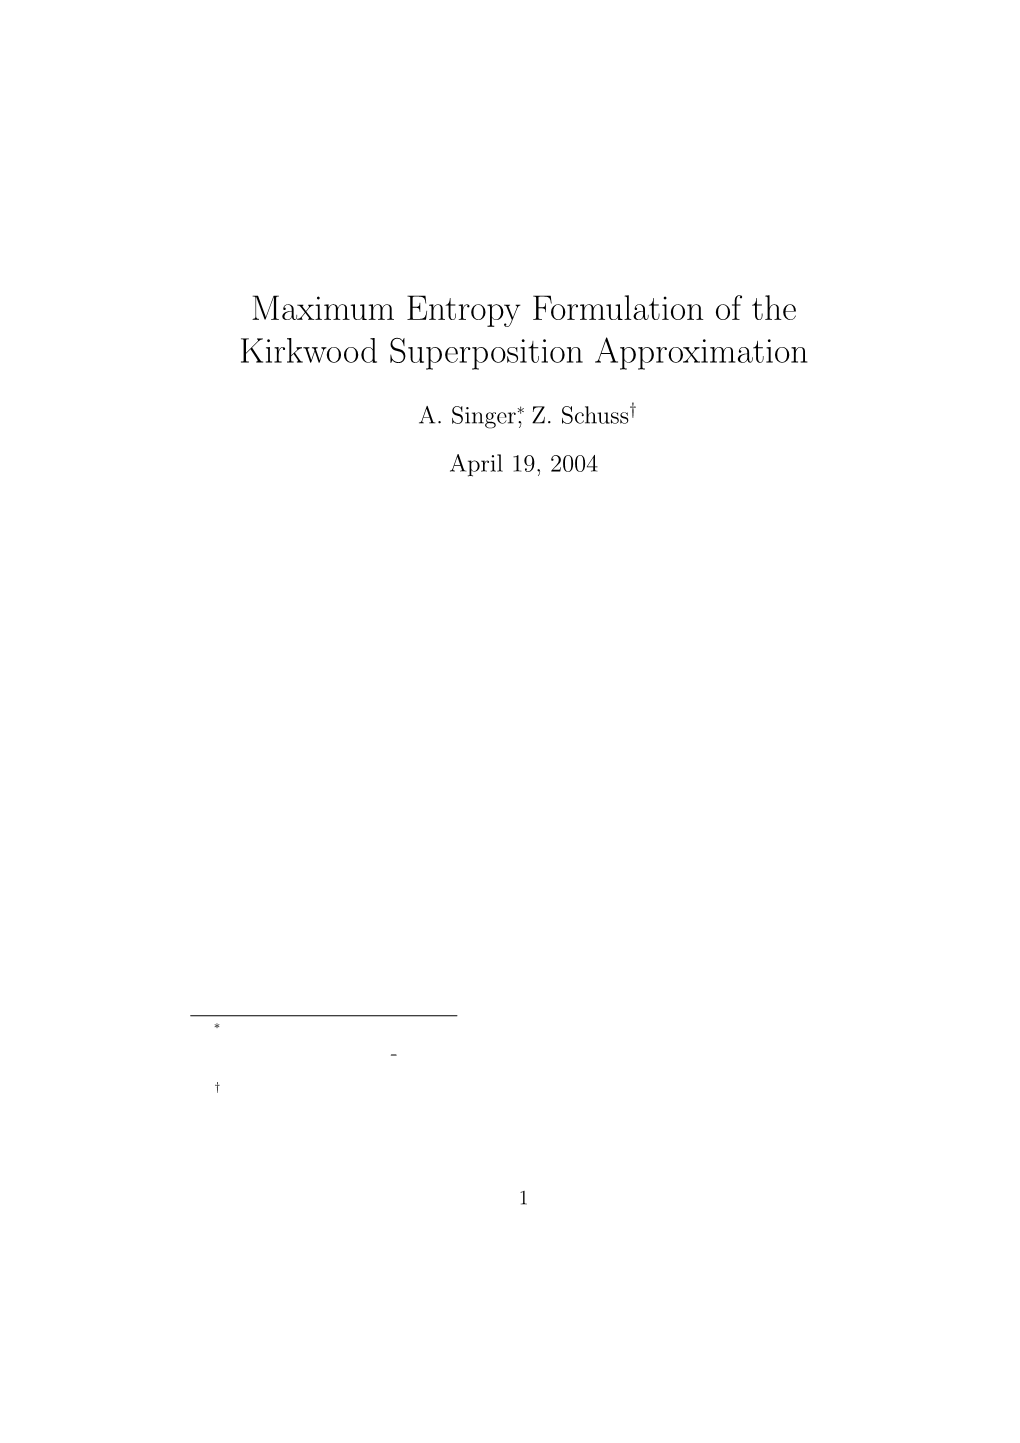 Maximum Entropy Formulation of the Kirkwood Superposition Approximation